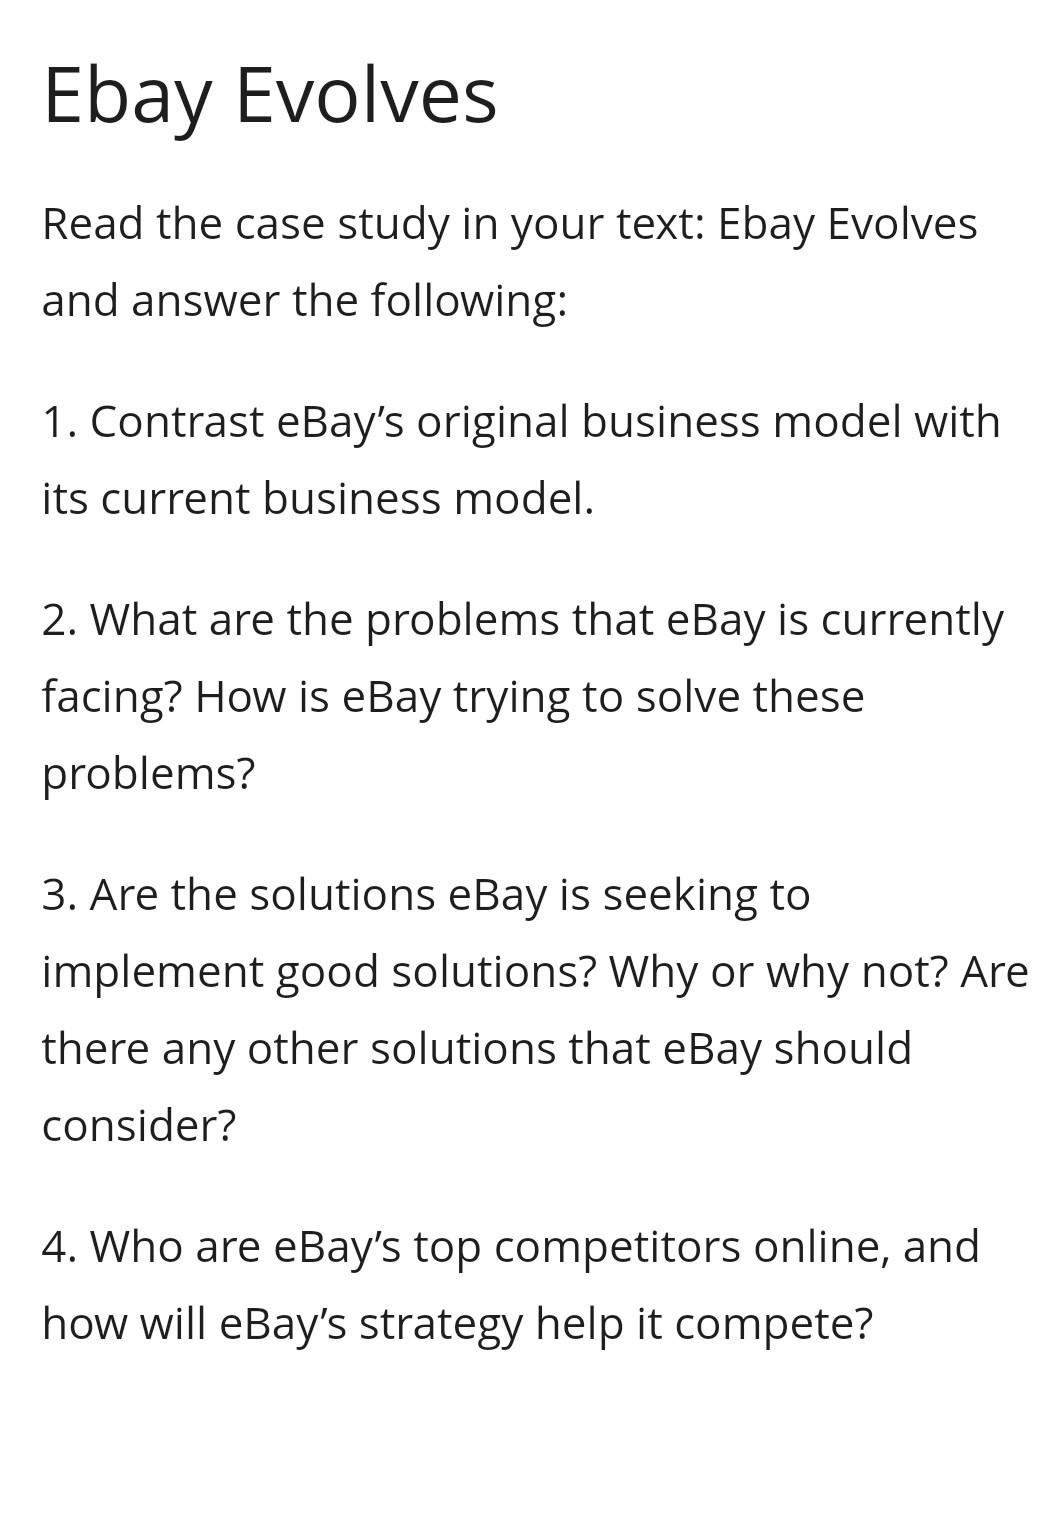 ebay evolves case study answers